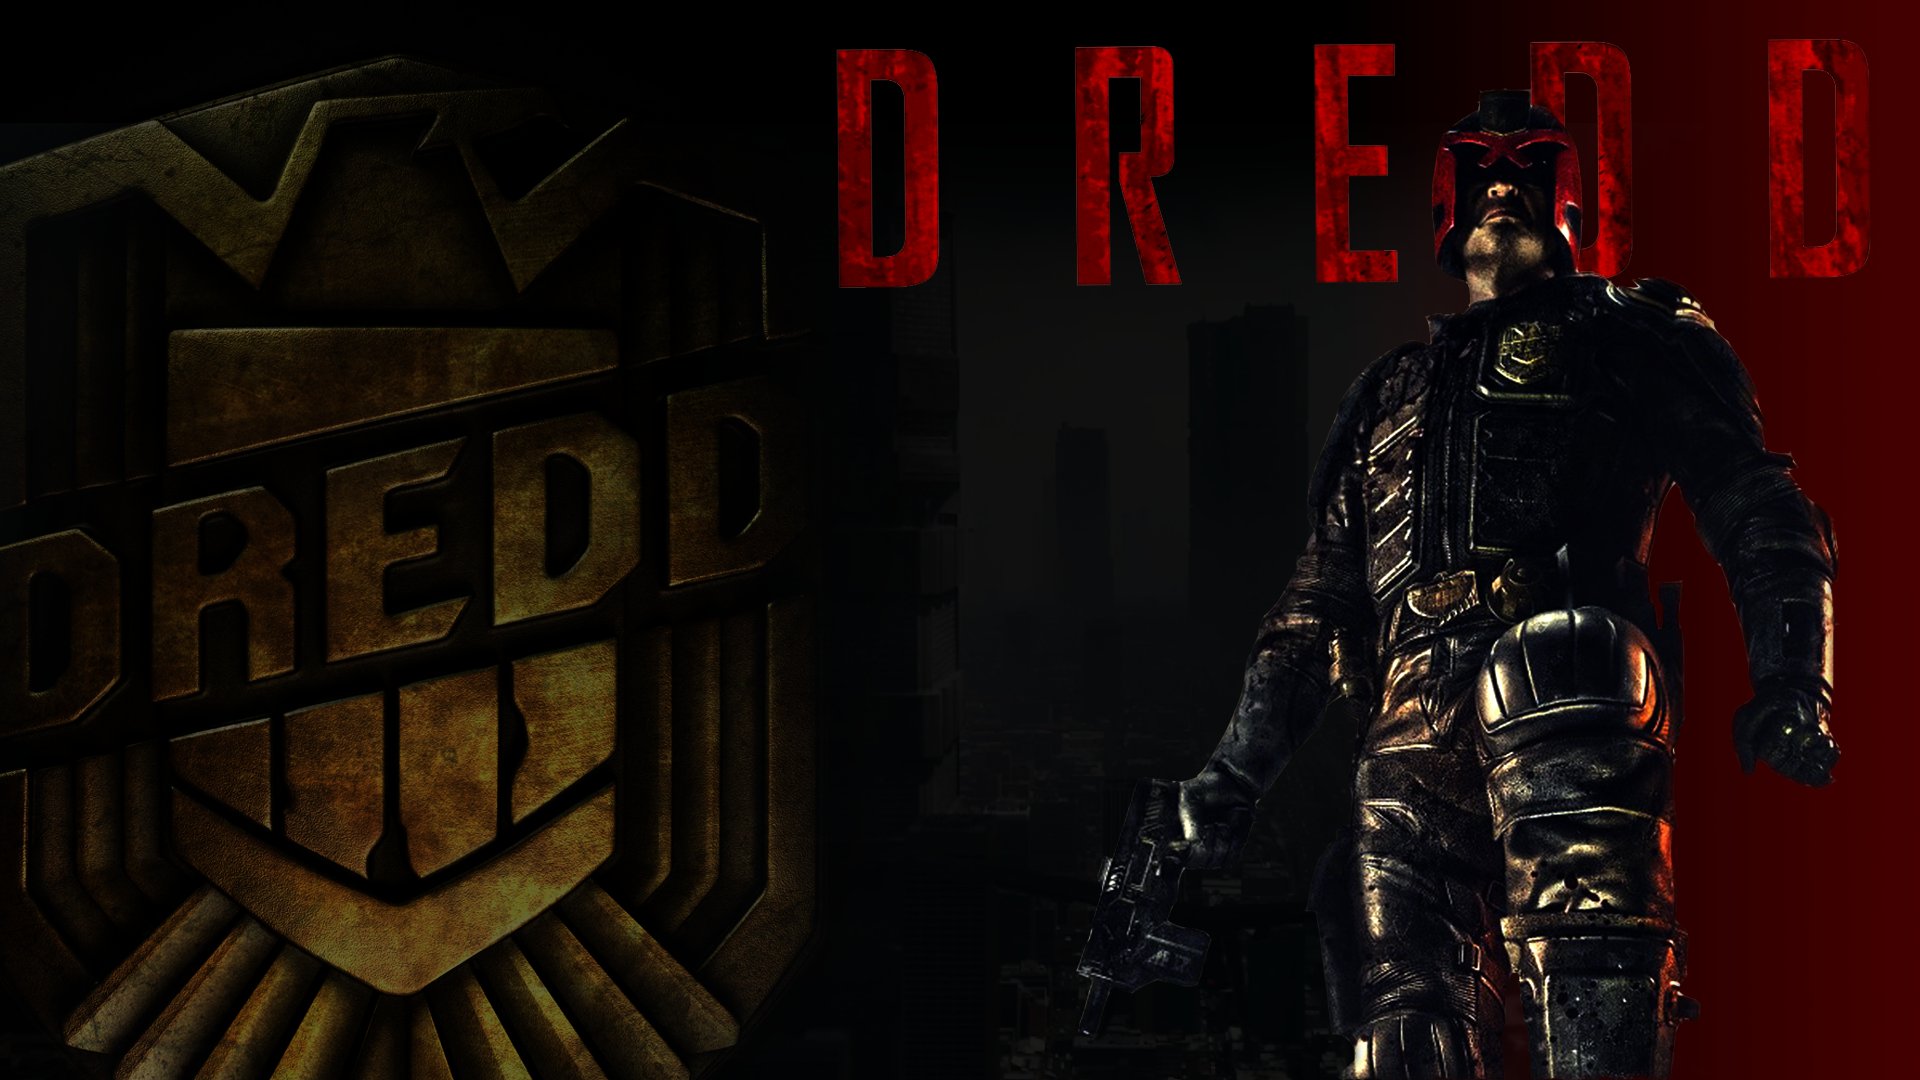 Dredd Sci Fi Action Superhero Judge Wallpaper Background